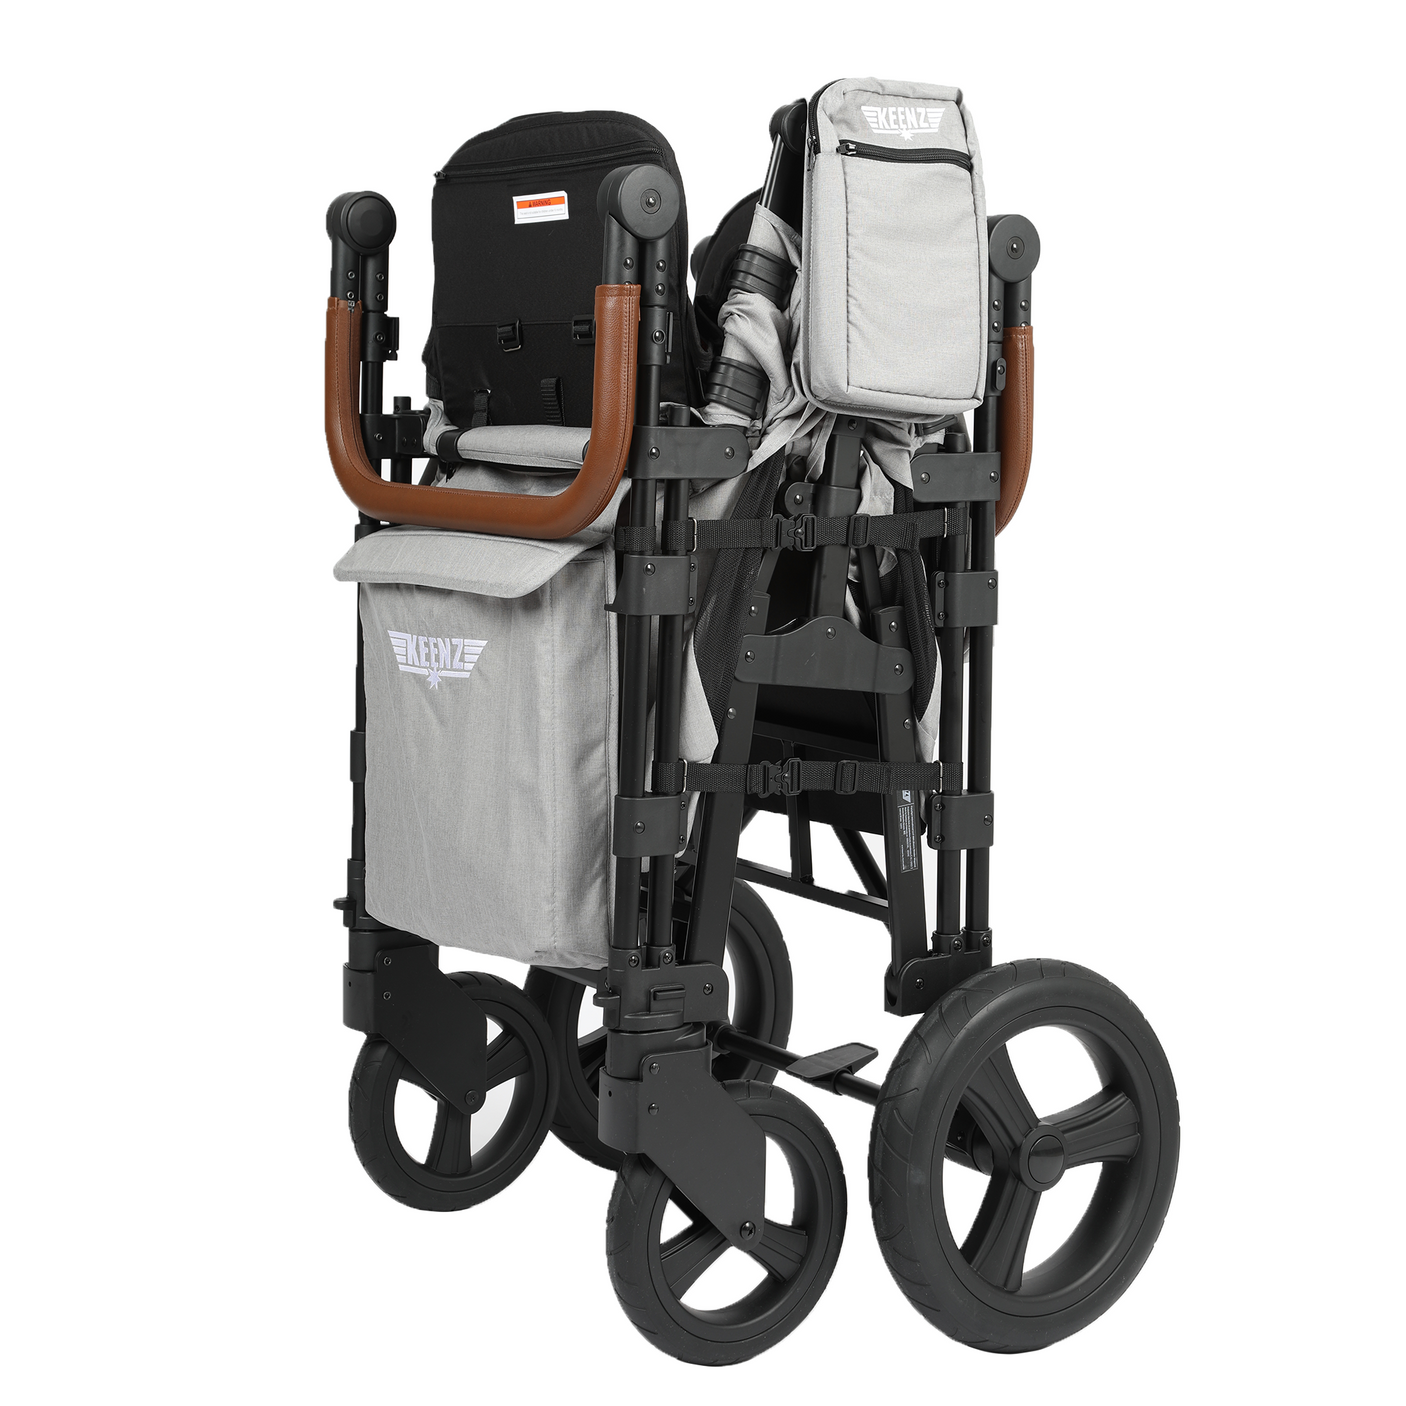 Keenz XC - Luxury Comfort Stroller Wagon 2 Passenger REFURB